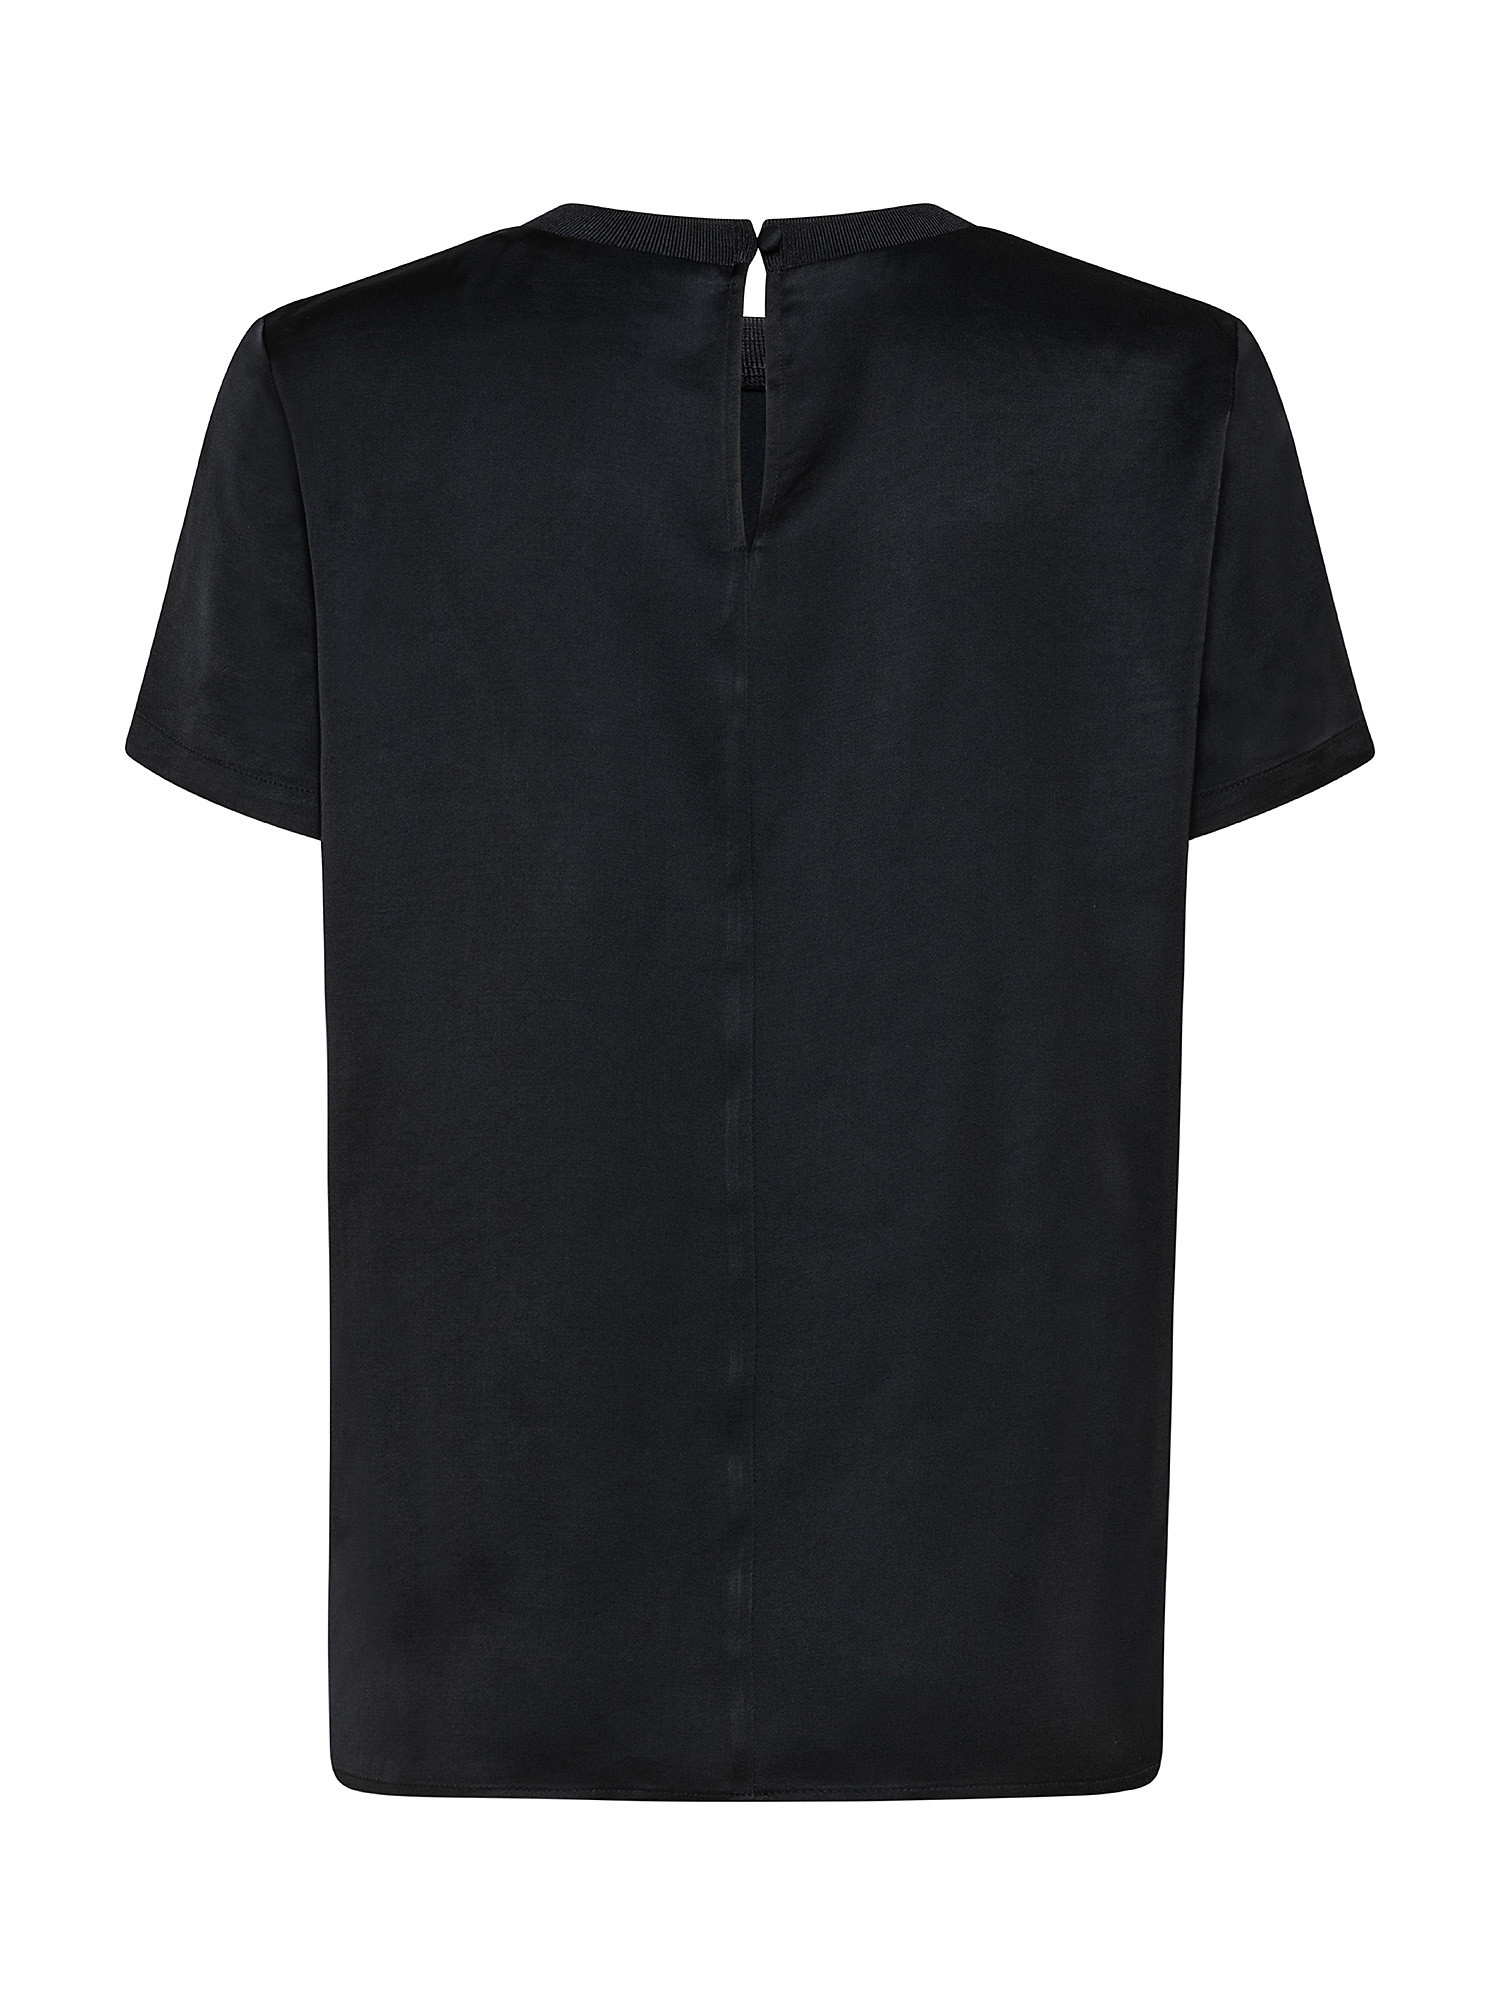 Satin blouse, Black, large image number 1